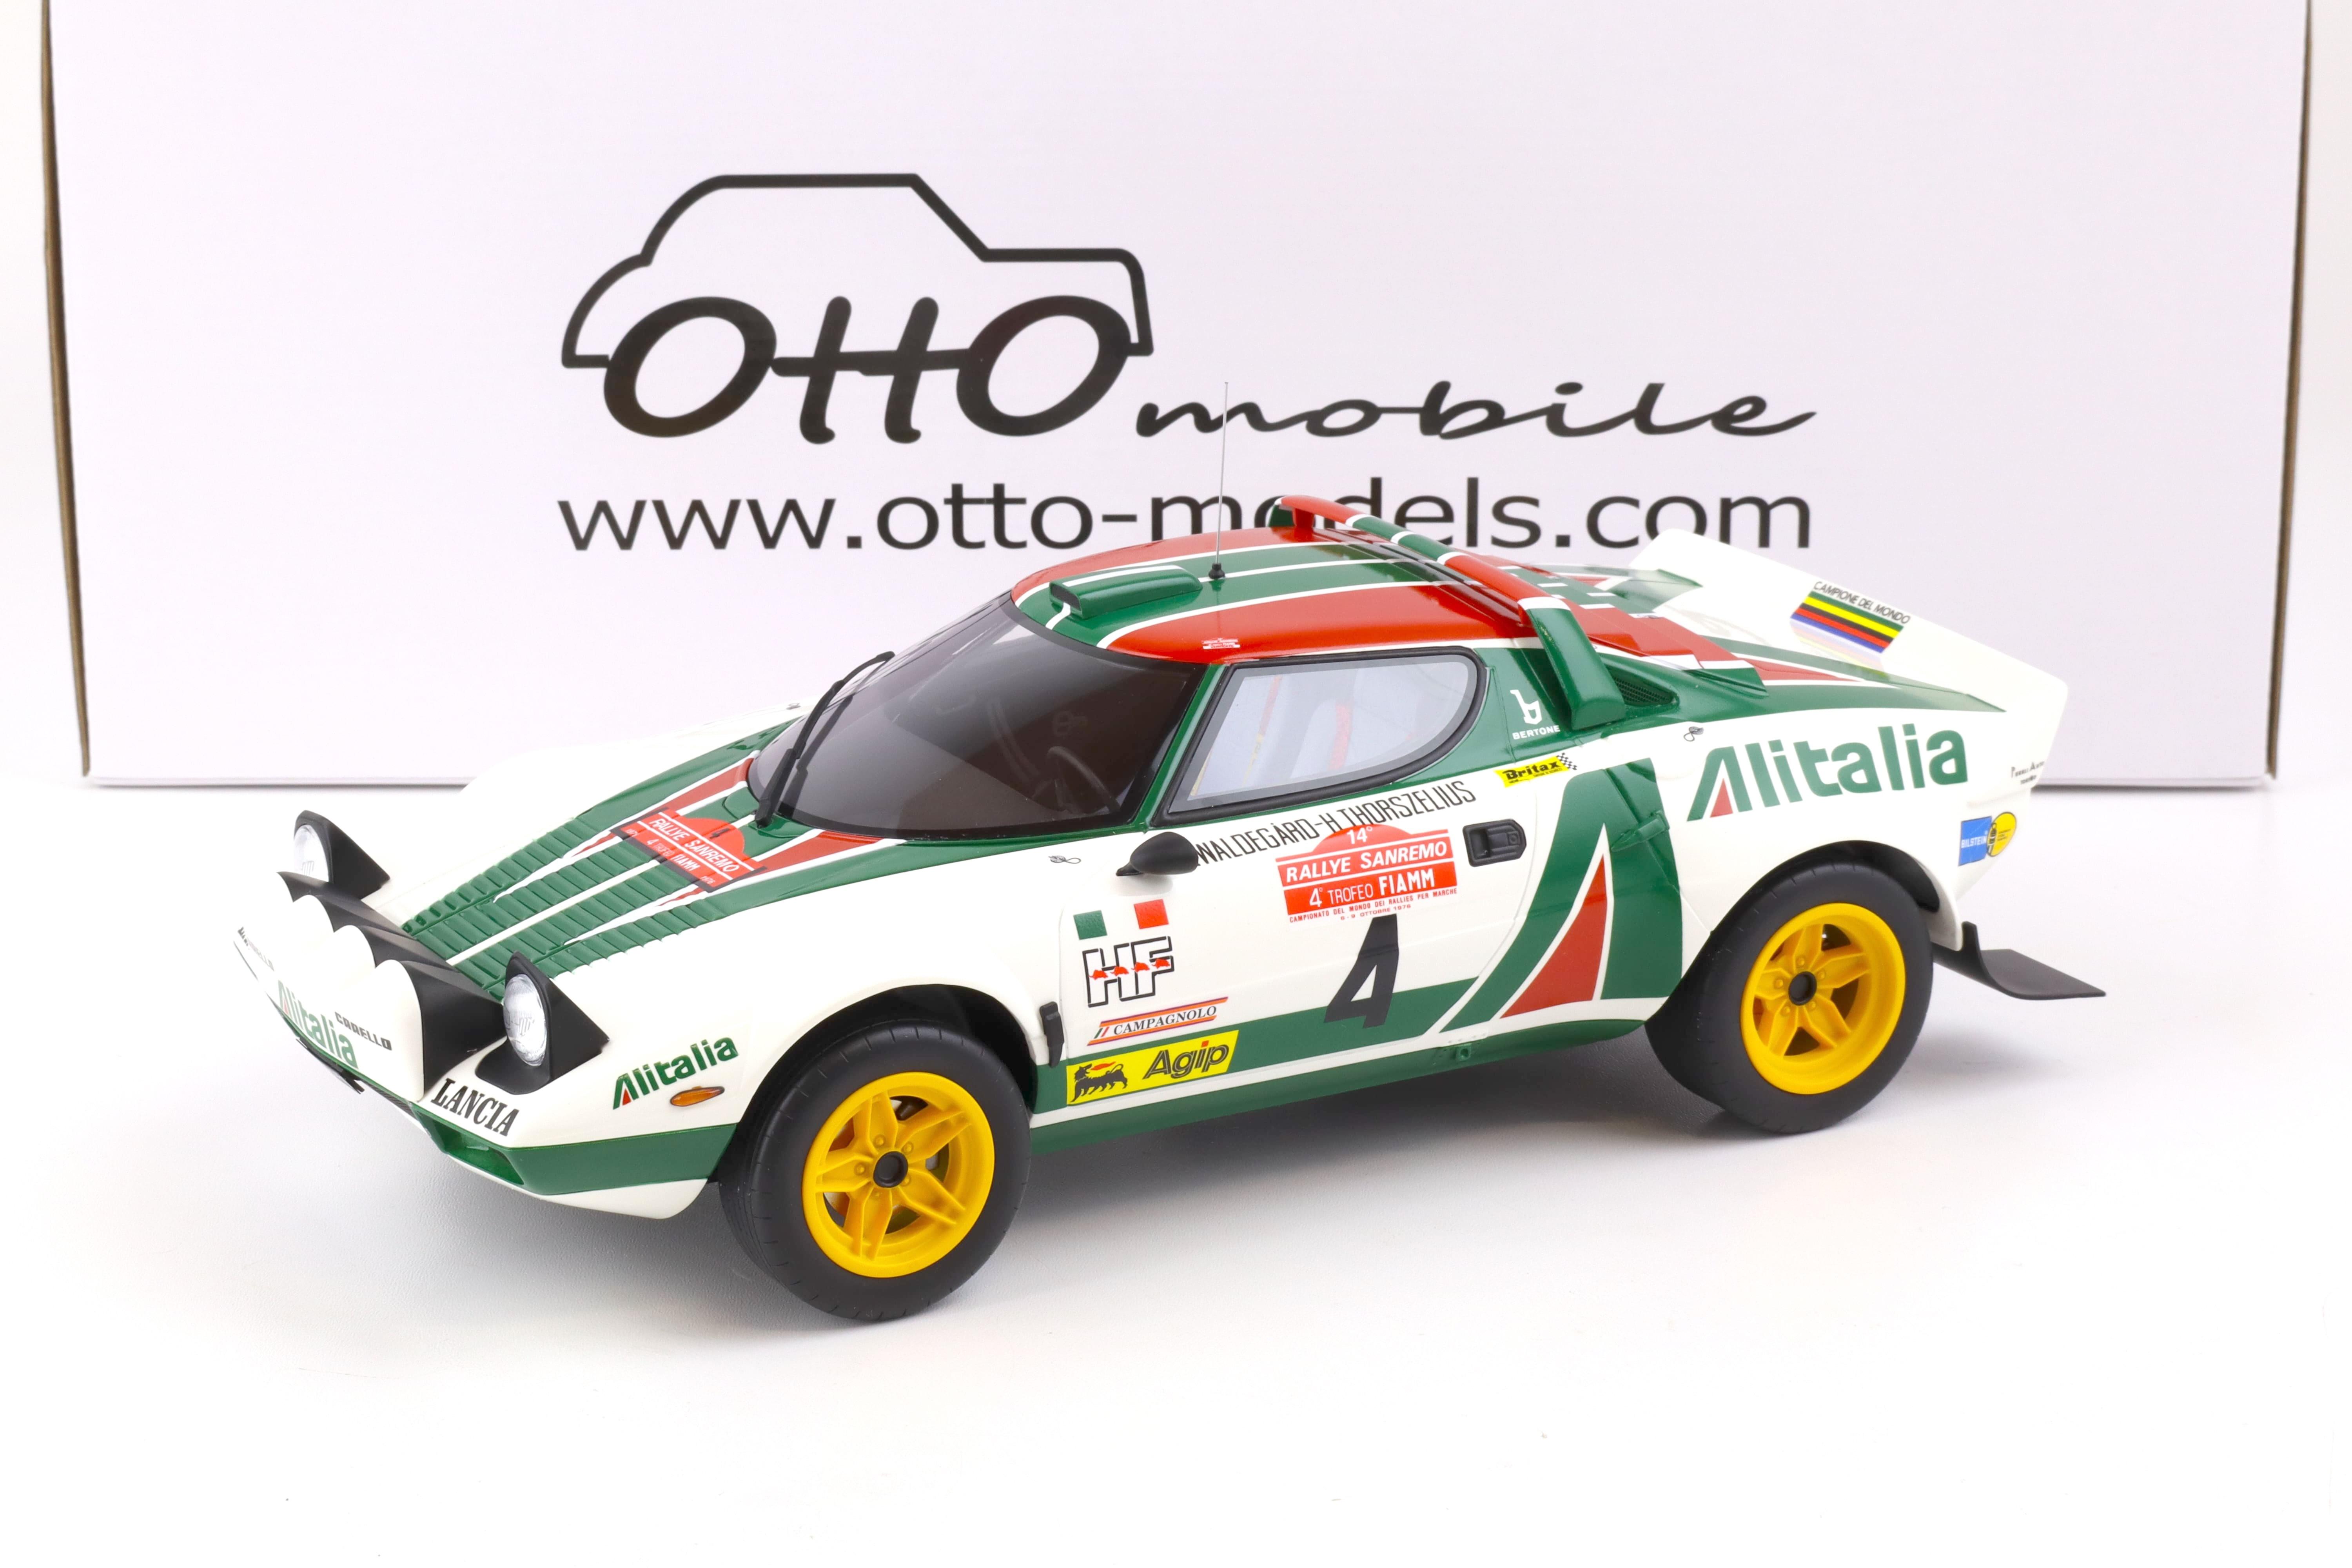 1:12 OTTO mobile G037 Lancia Stratos Rallye San Remo 1976 Alitalia #4